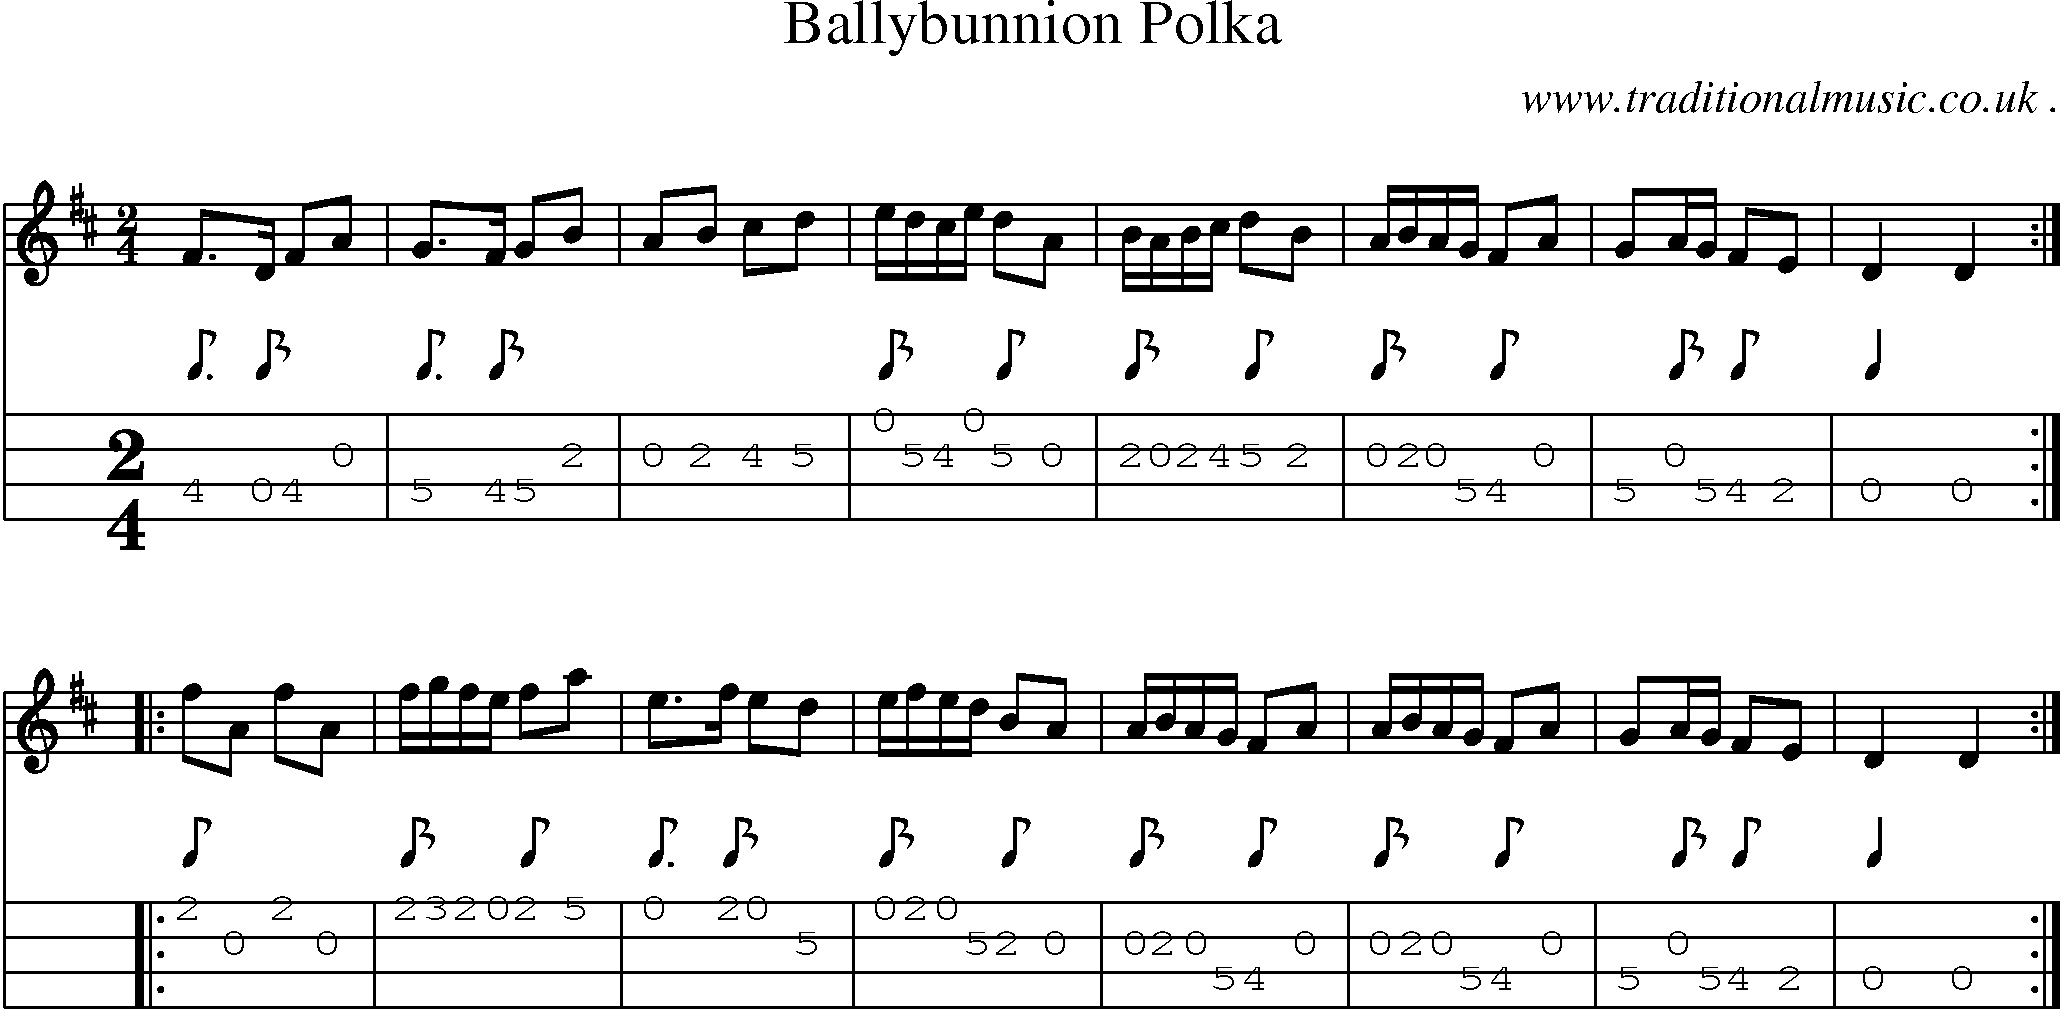 Sheet-Music and Mandolin Tabs for Ballybunnion Polka